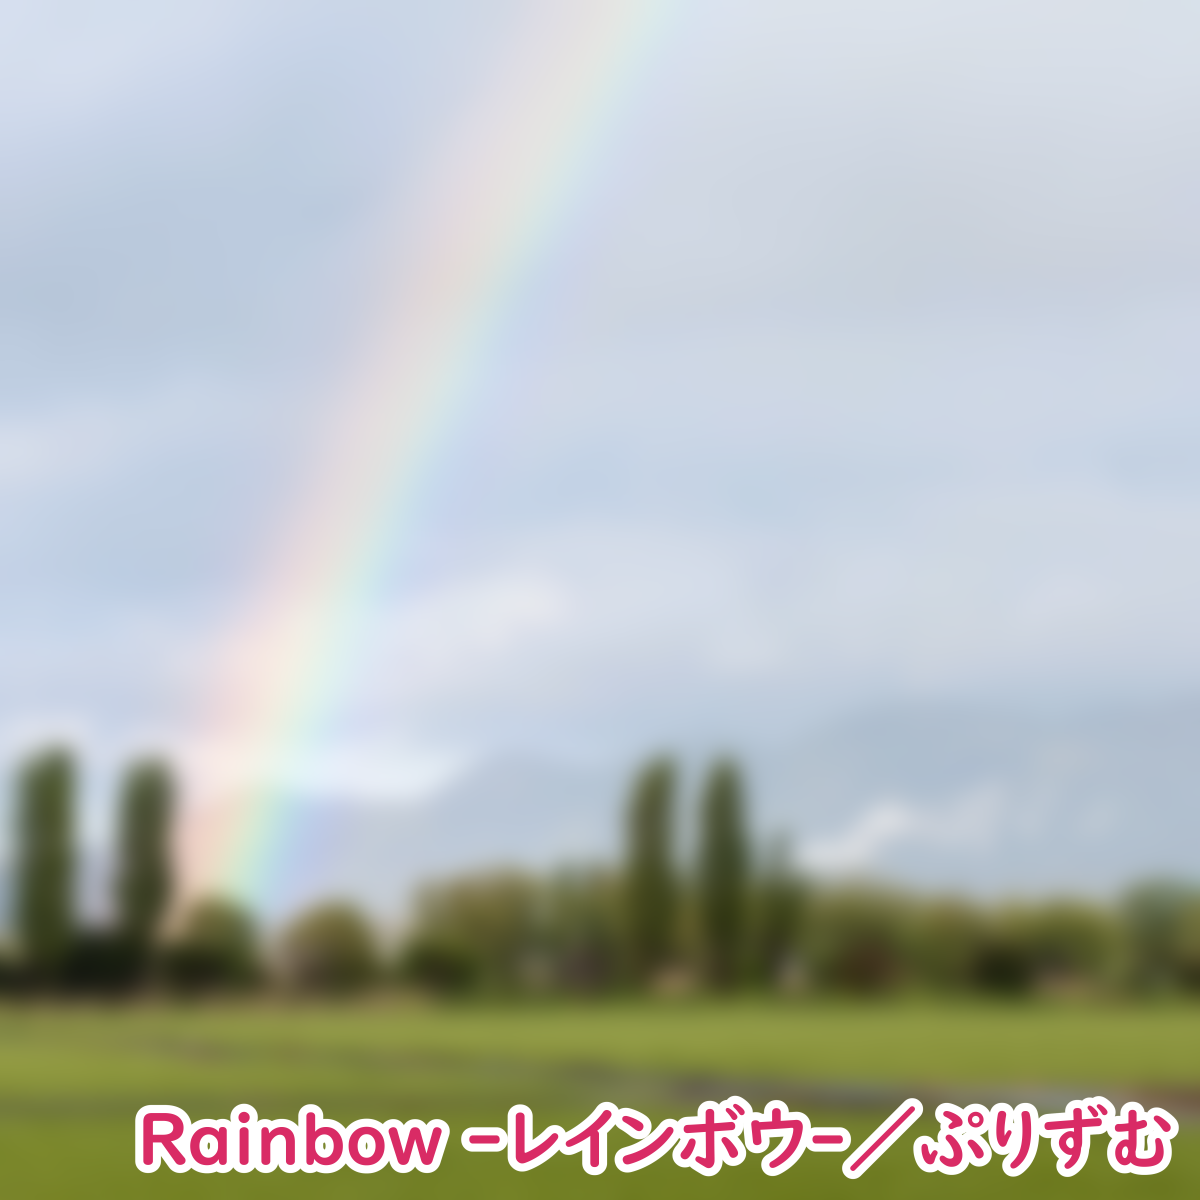 Rainbow -レインボウ- -Short ver.-